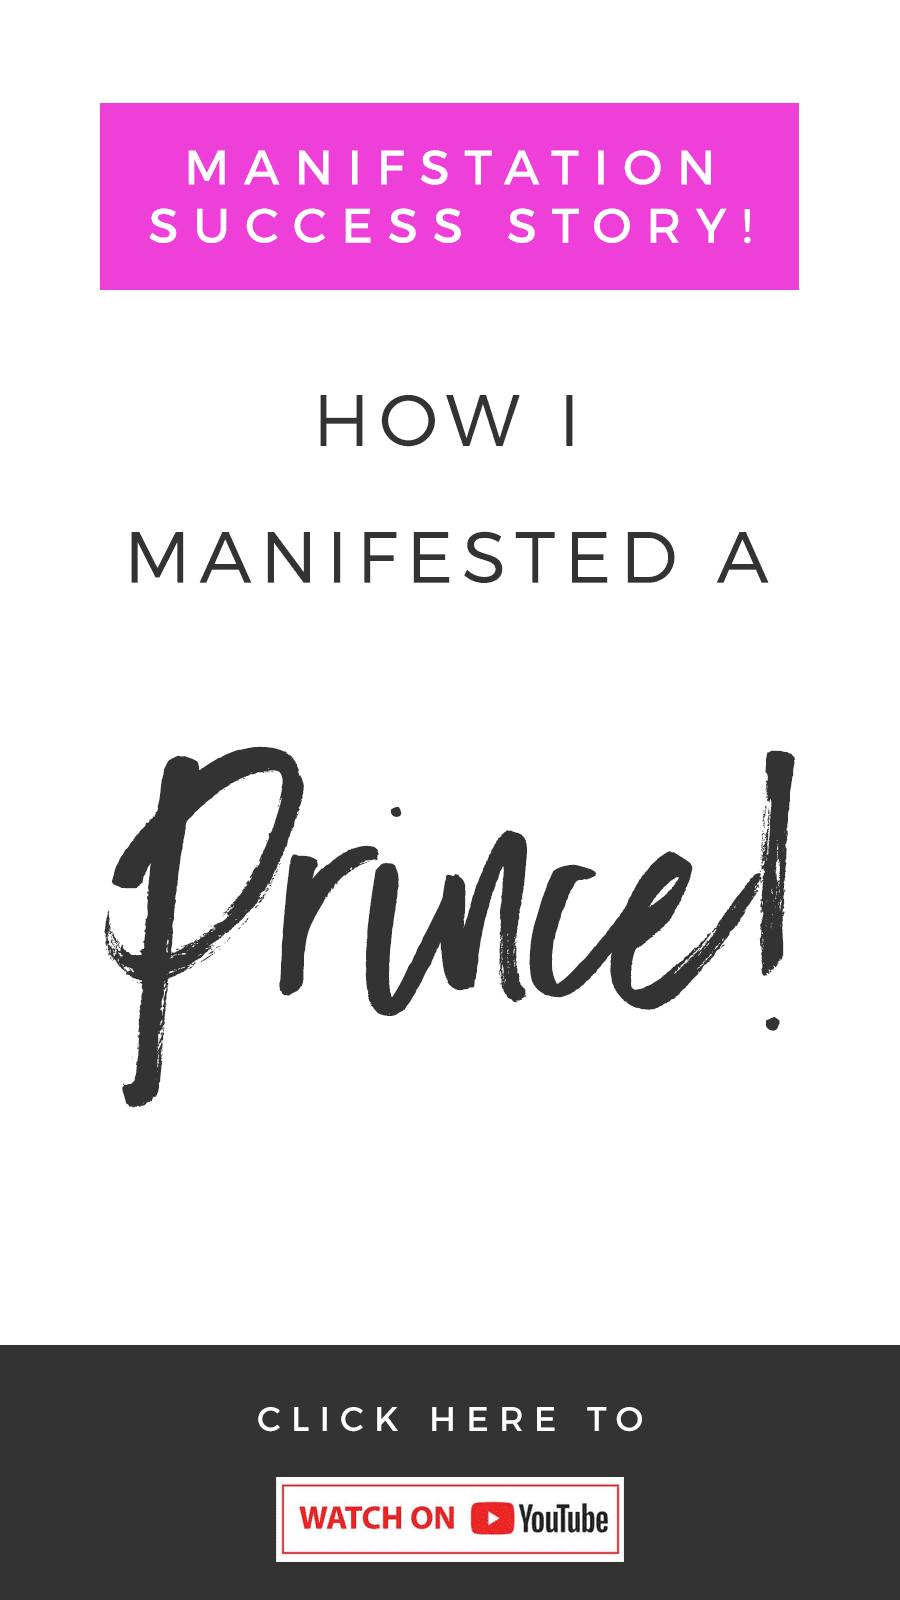 Manifestation Success Story: How I Manifested A Prince